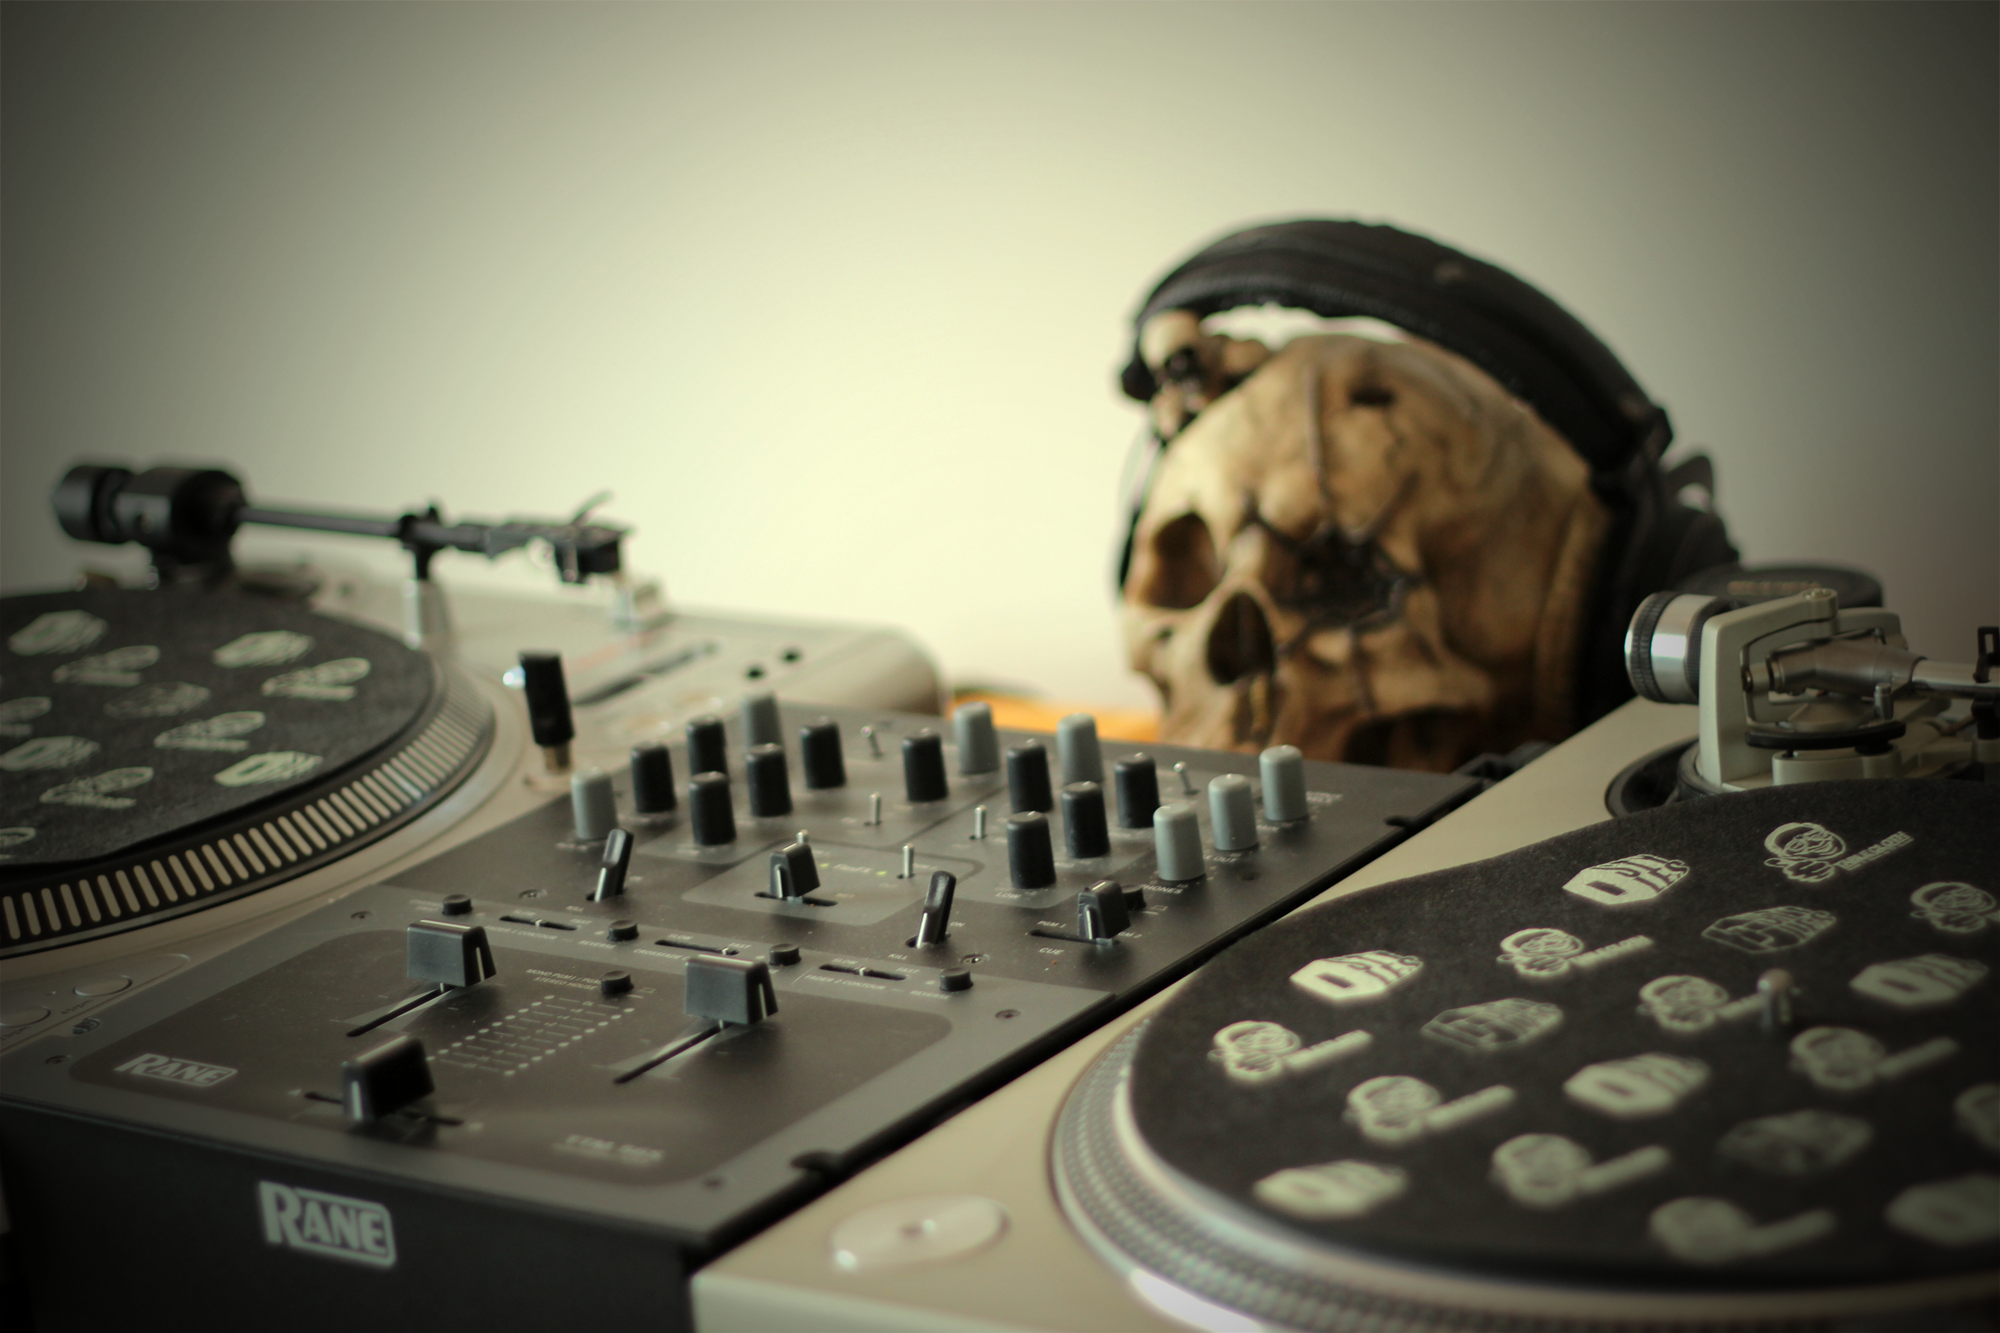 Turntables DJ Skull Audio Scratches Vinyl Mixing Consoles Beige 2000x1333